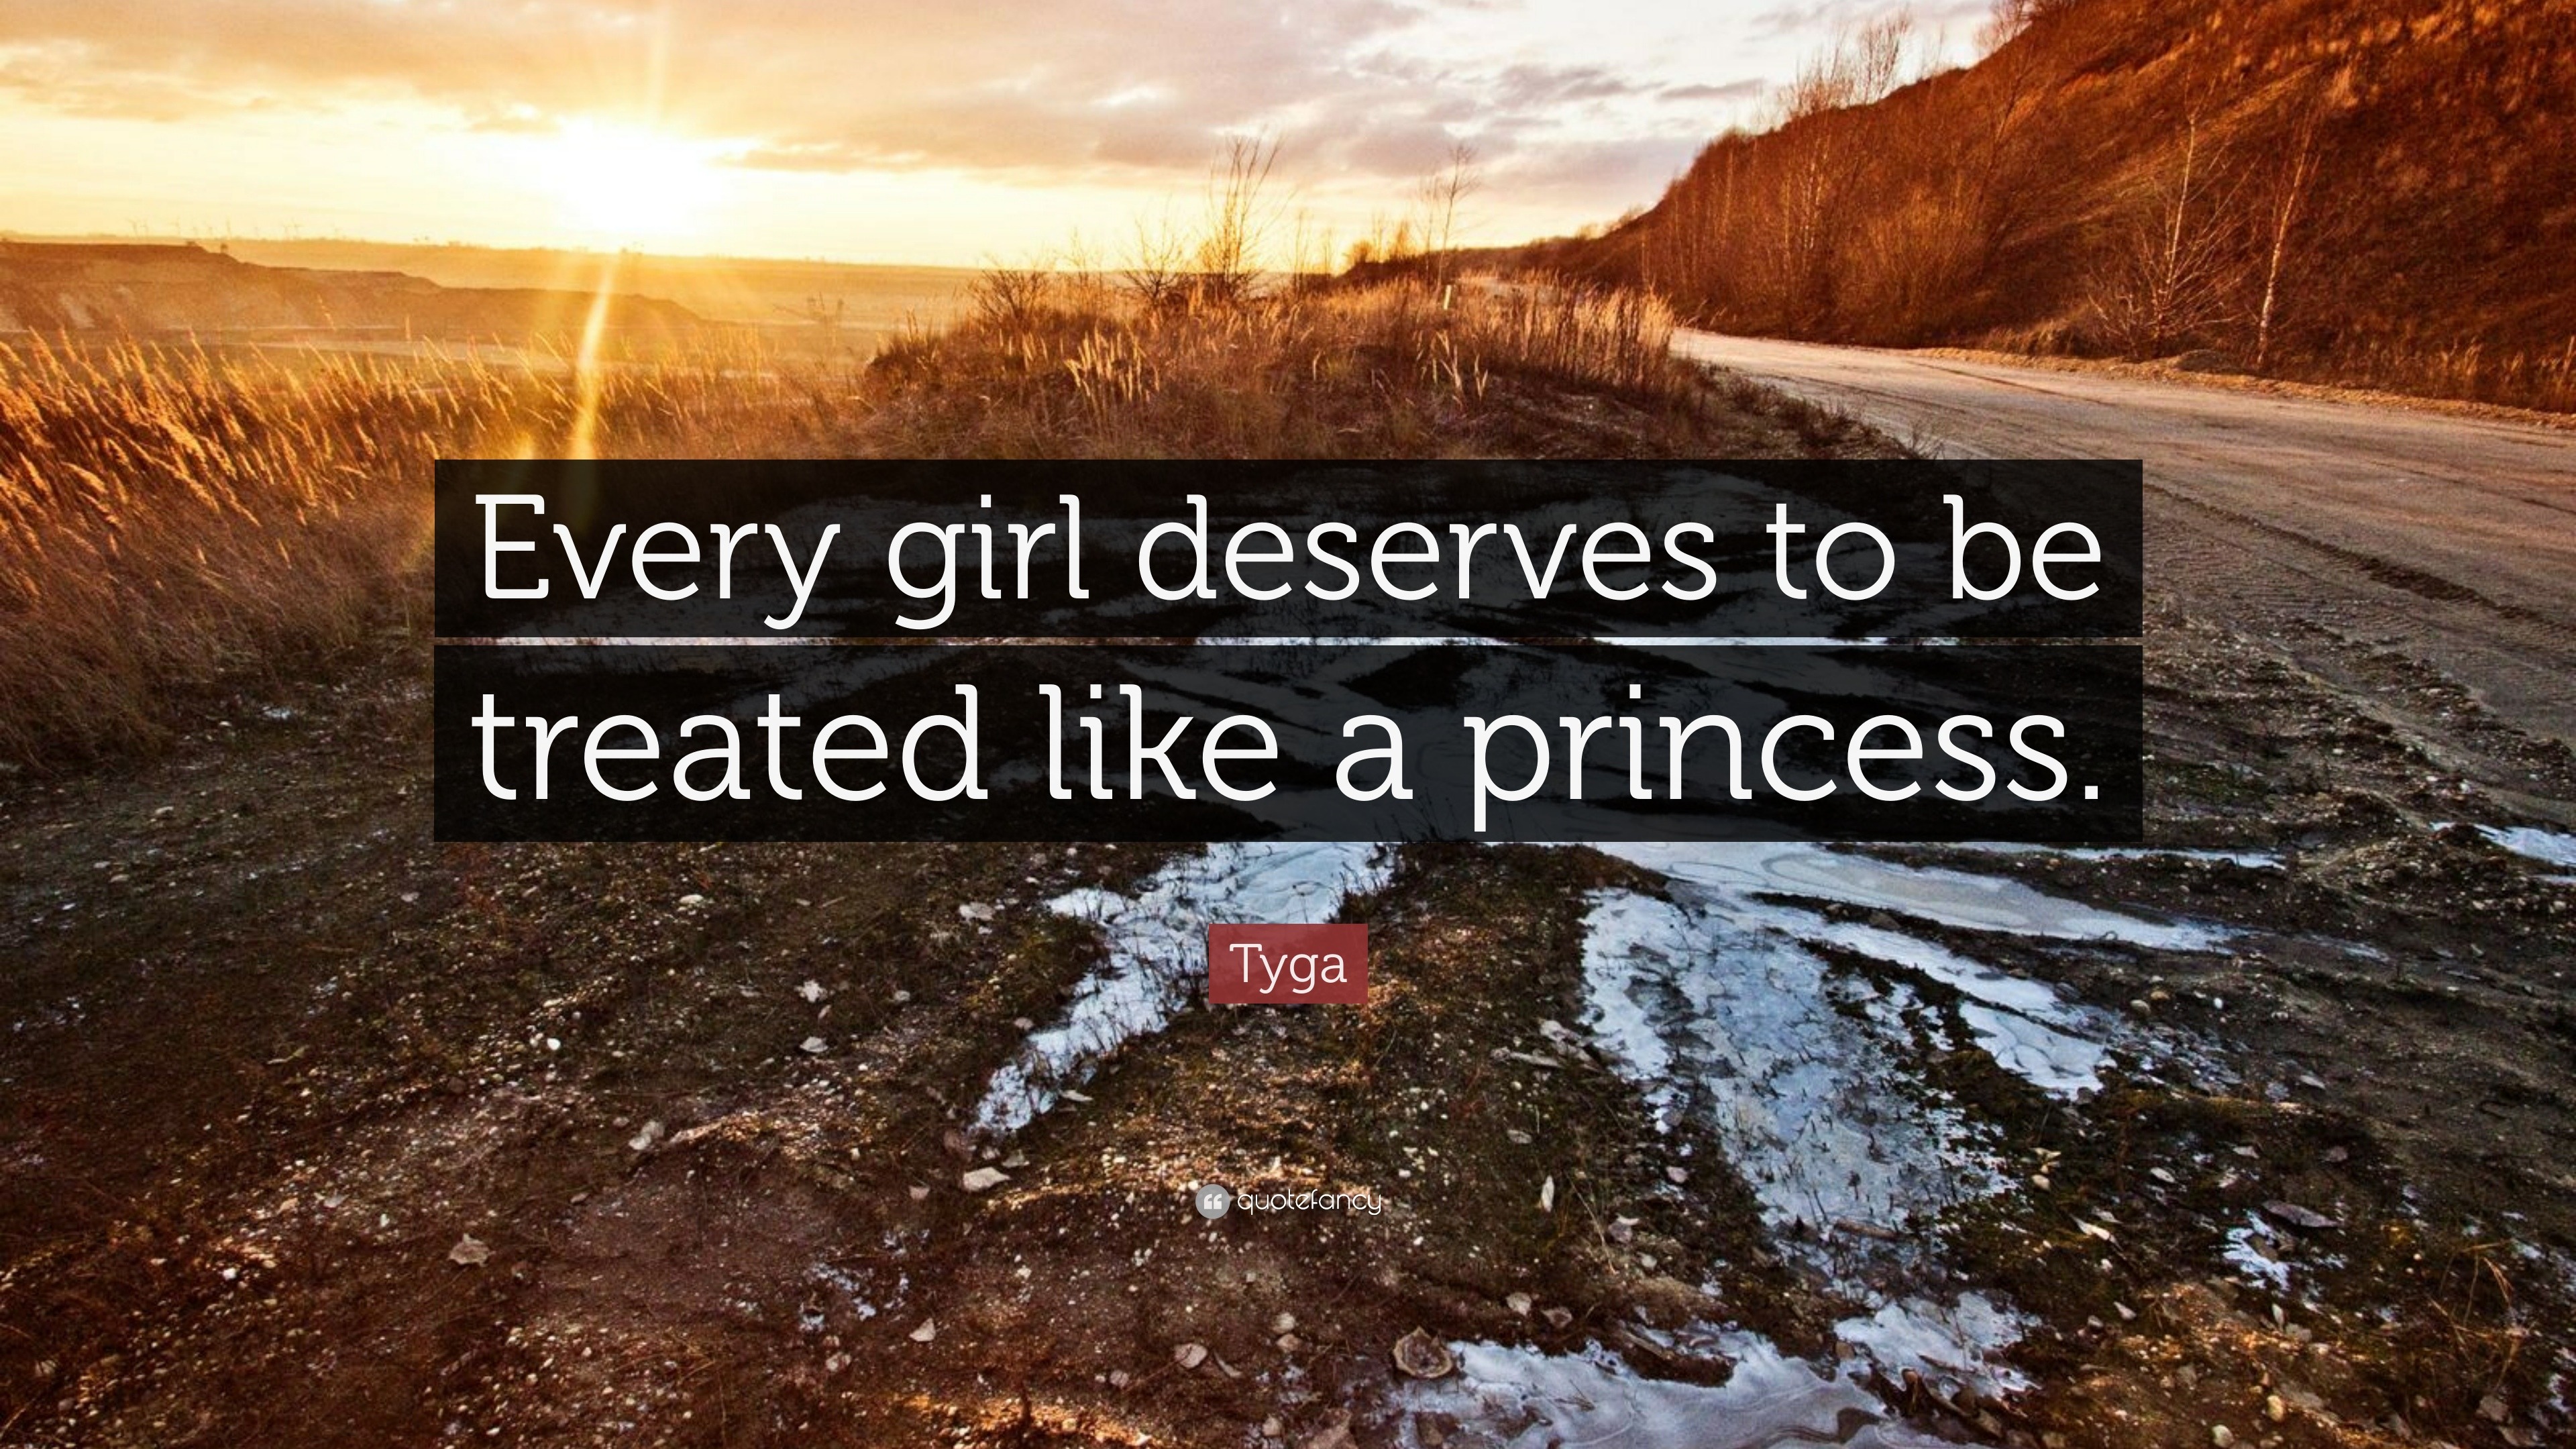 Every girl deserves to be treated like a princess